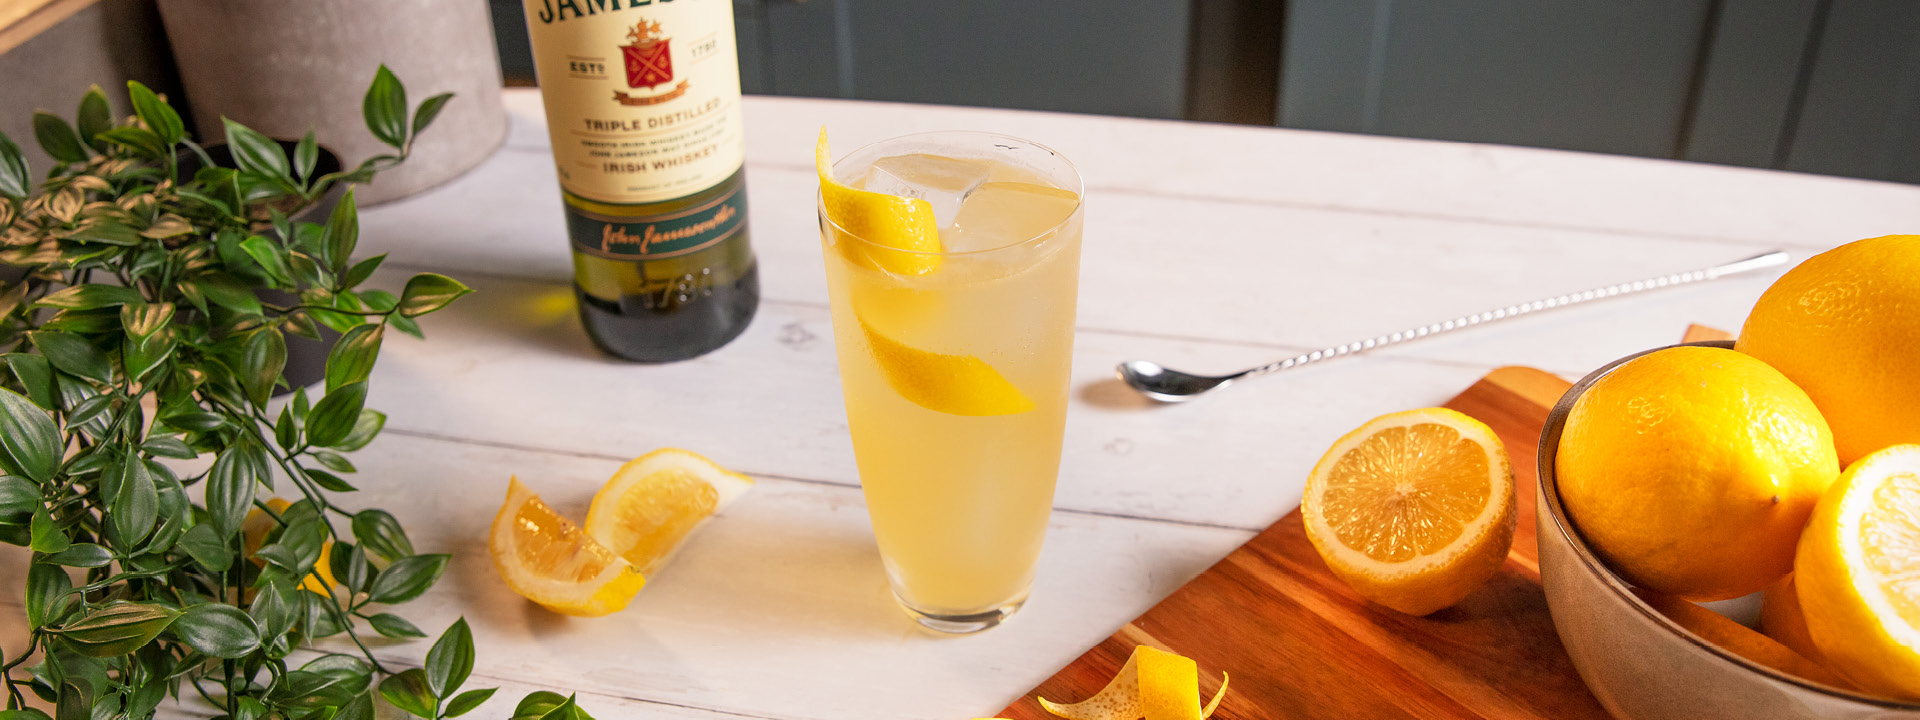 jameson irish whiskey cocktail garnished with a lemon spiral